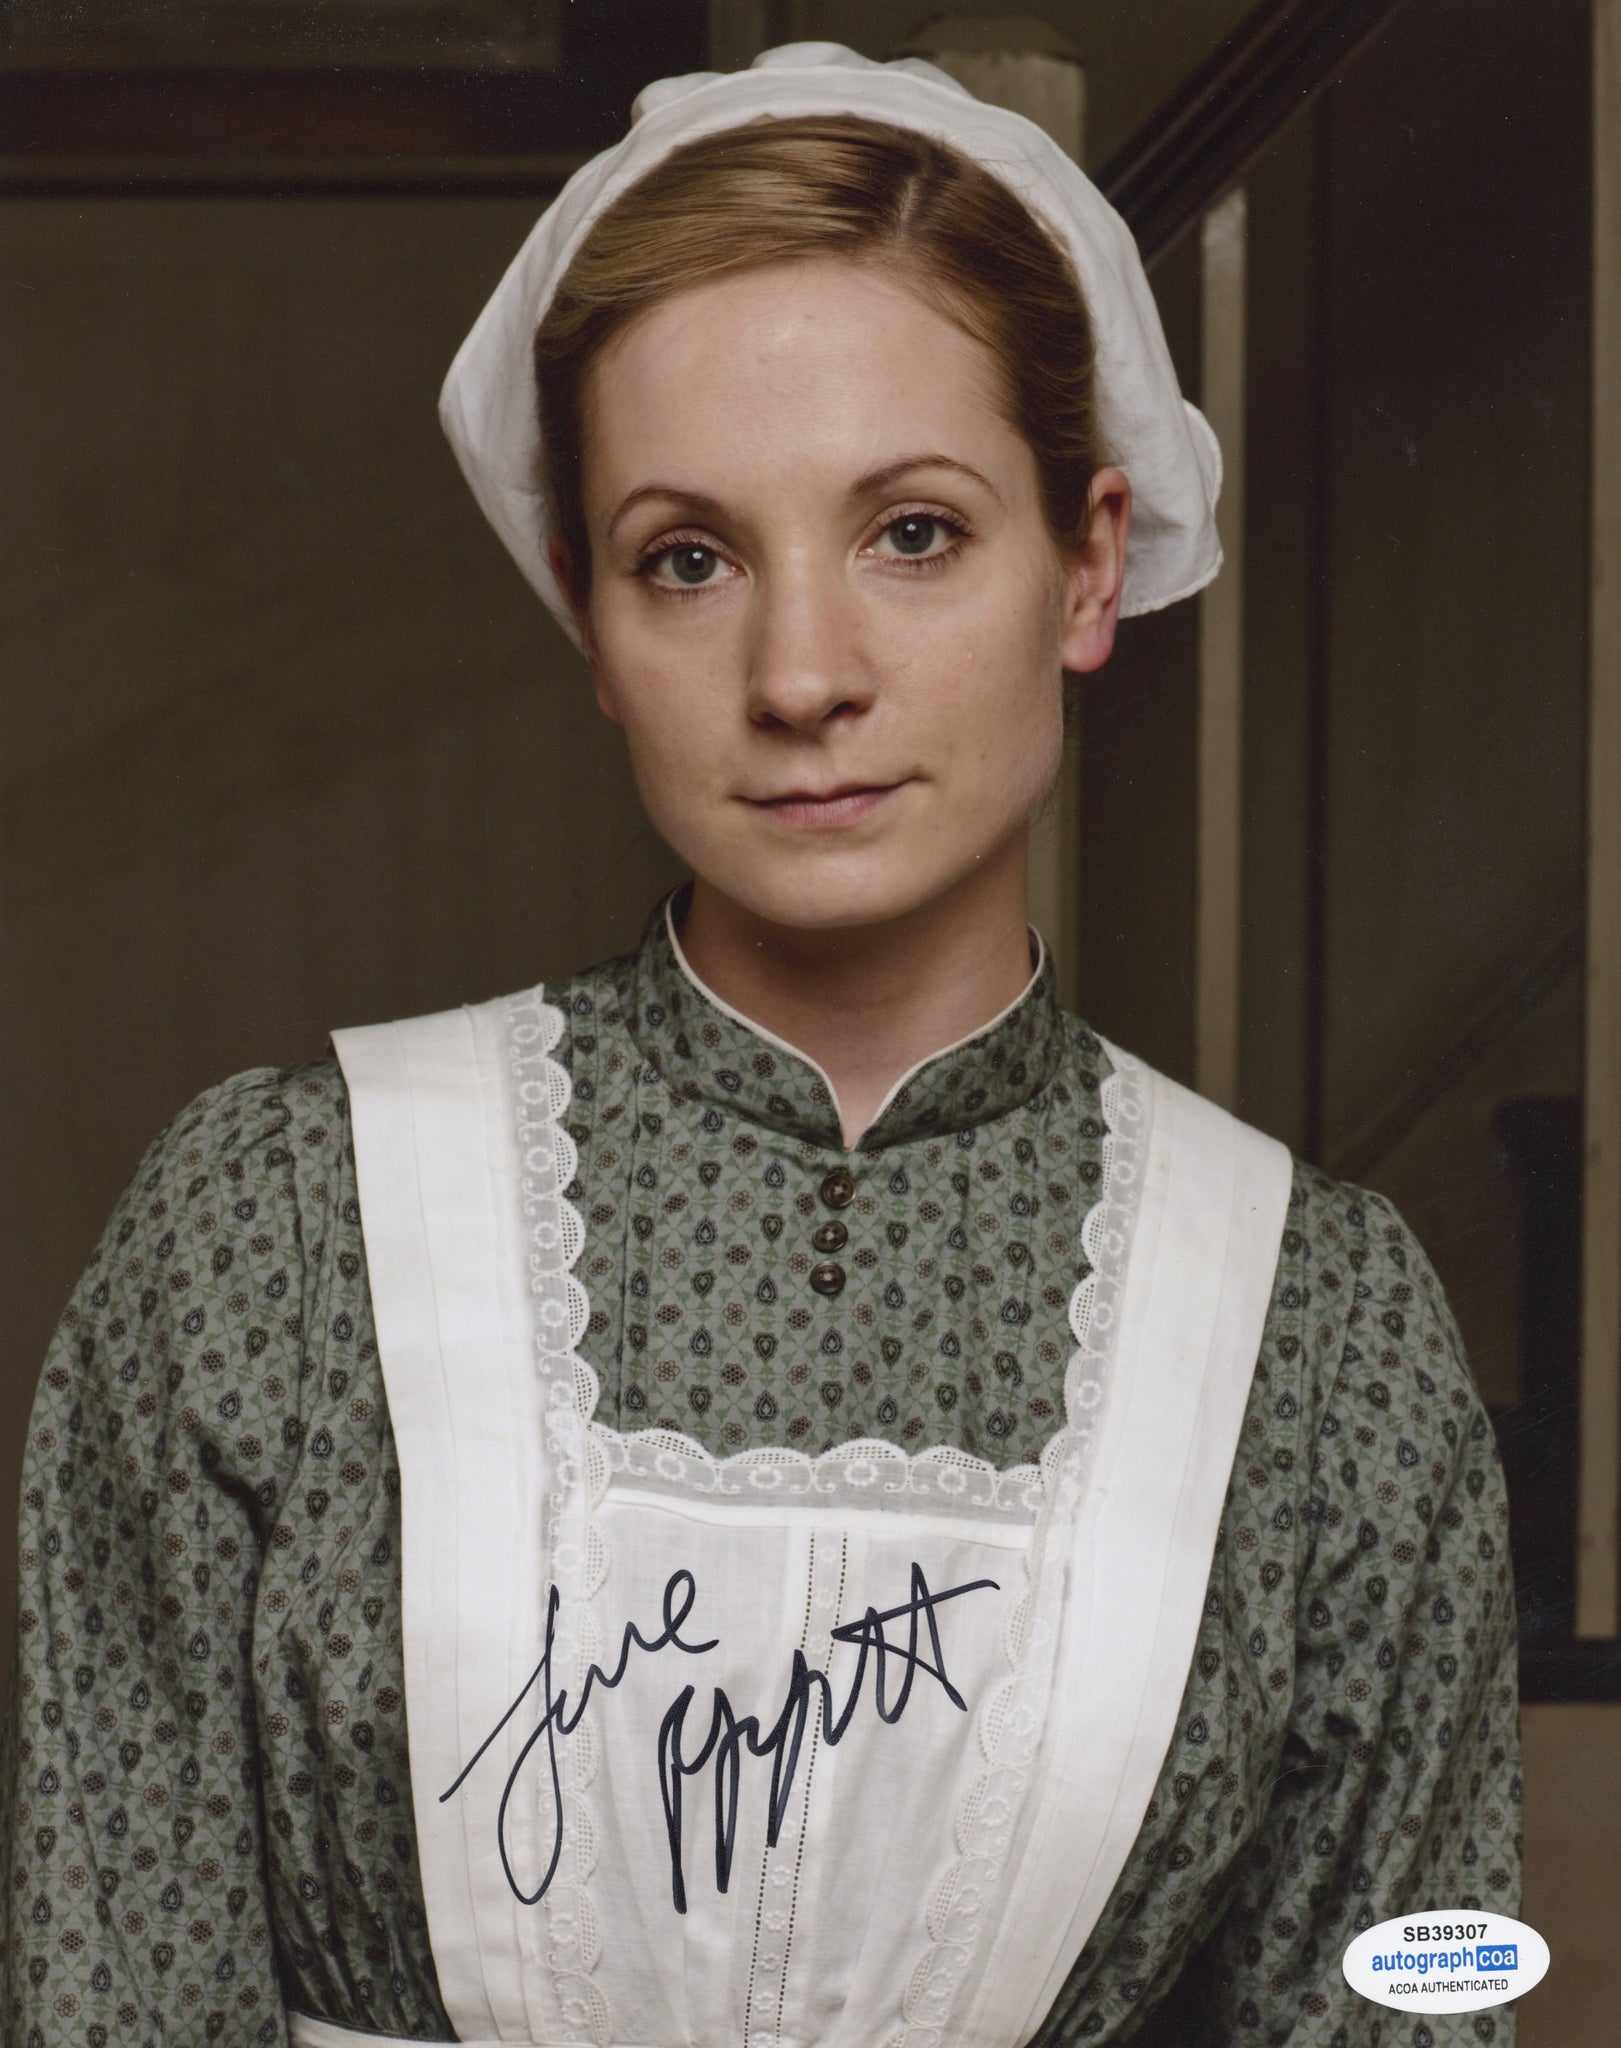 Joanne Froggatt Downton Abbey Signed Autograph 8x10 Photo ACOA